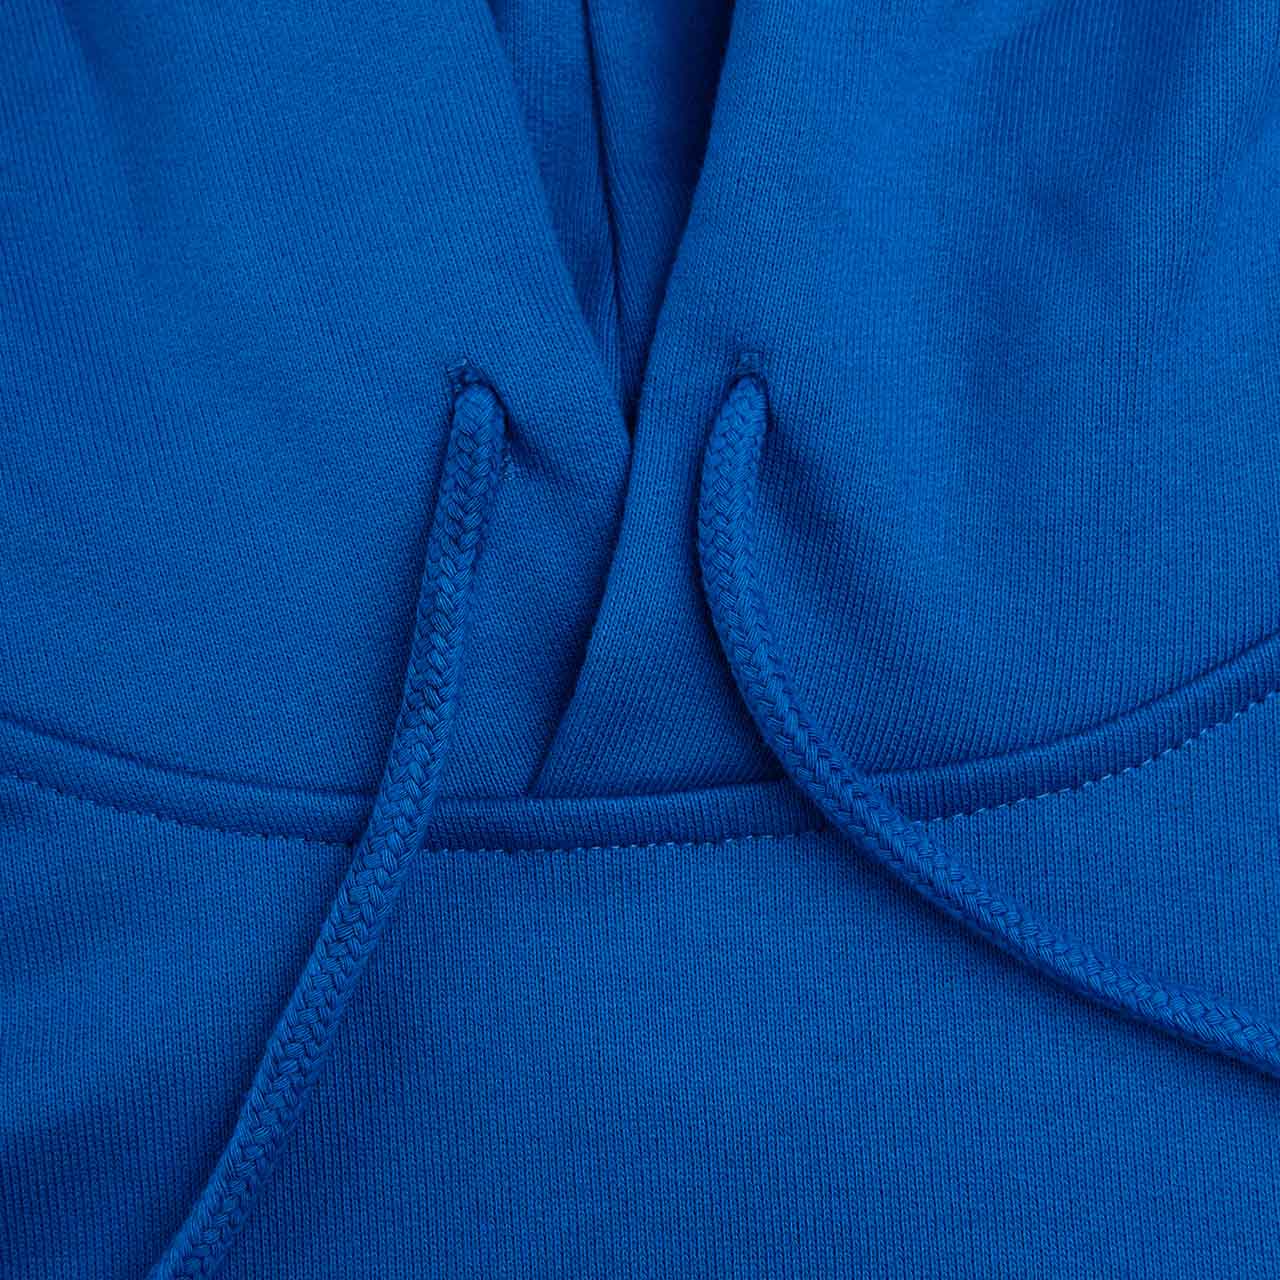 rassvet Kapuzenpullover mit großem Logo (blau)